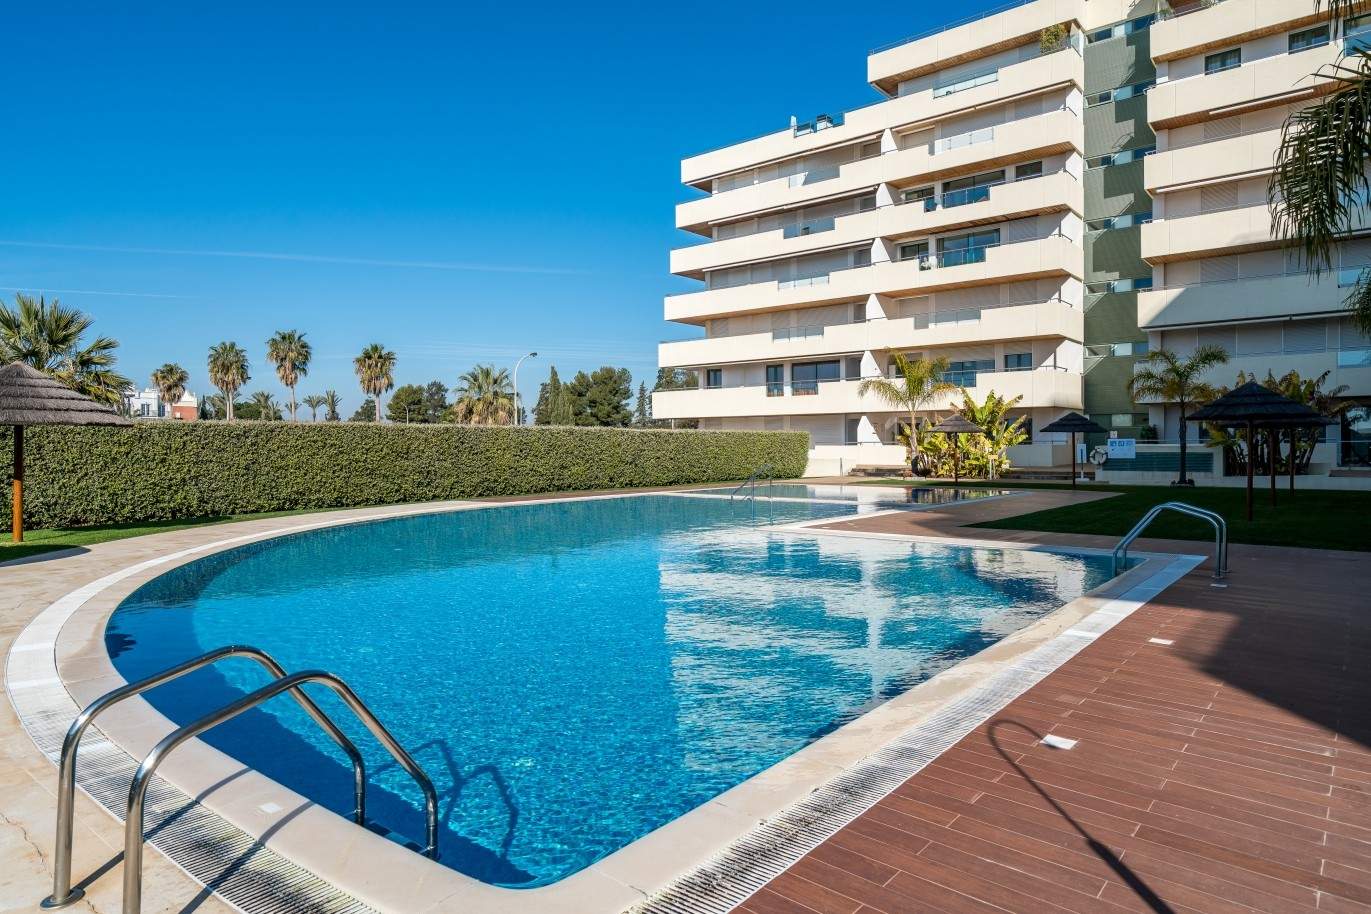 Apartment for sale, pool, close to beach, Vilamoura, Algarve, Portugal_74091